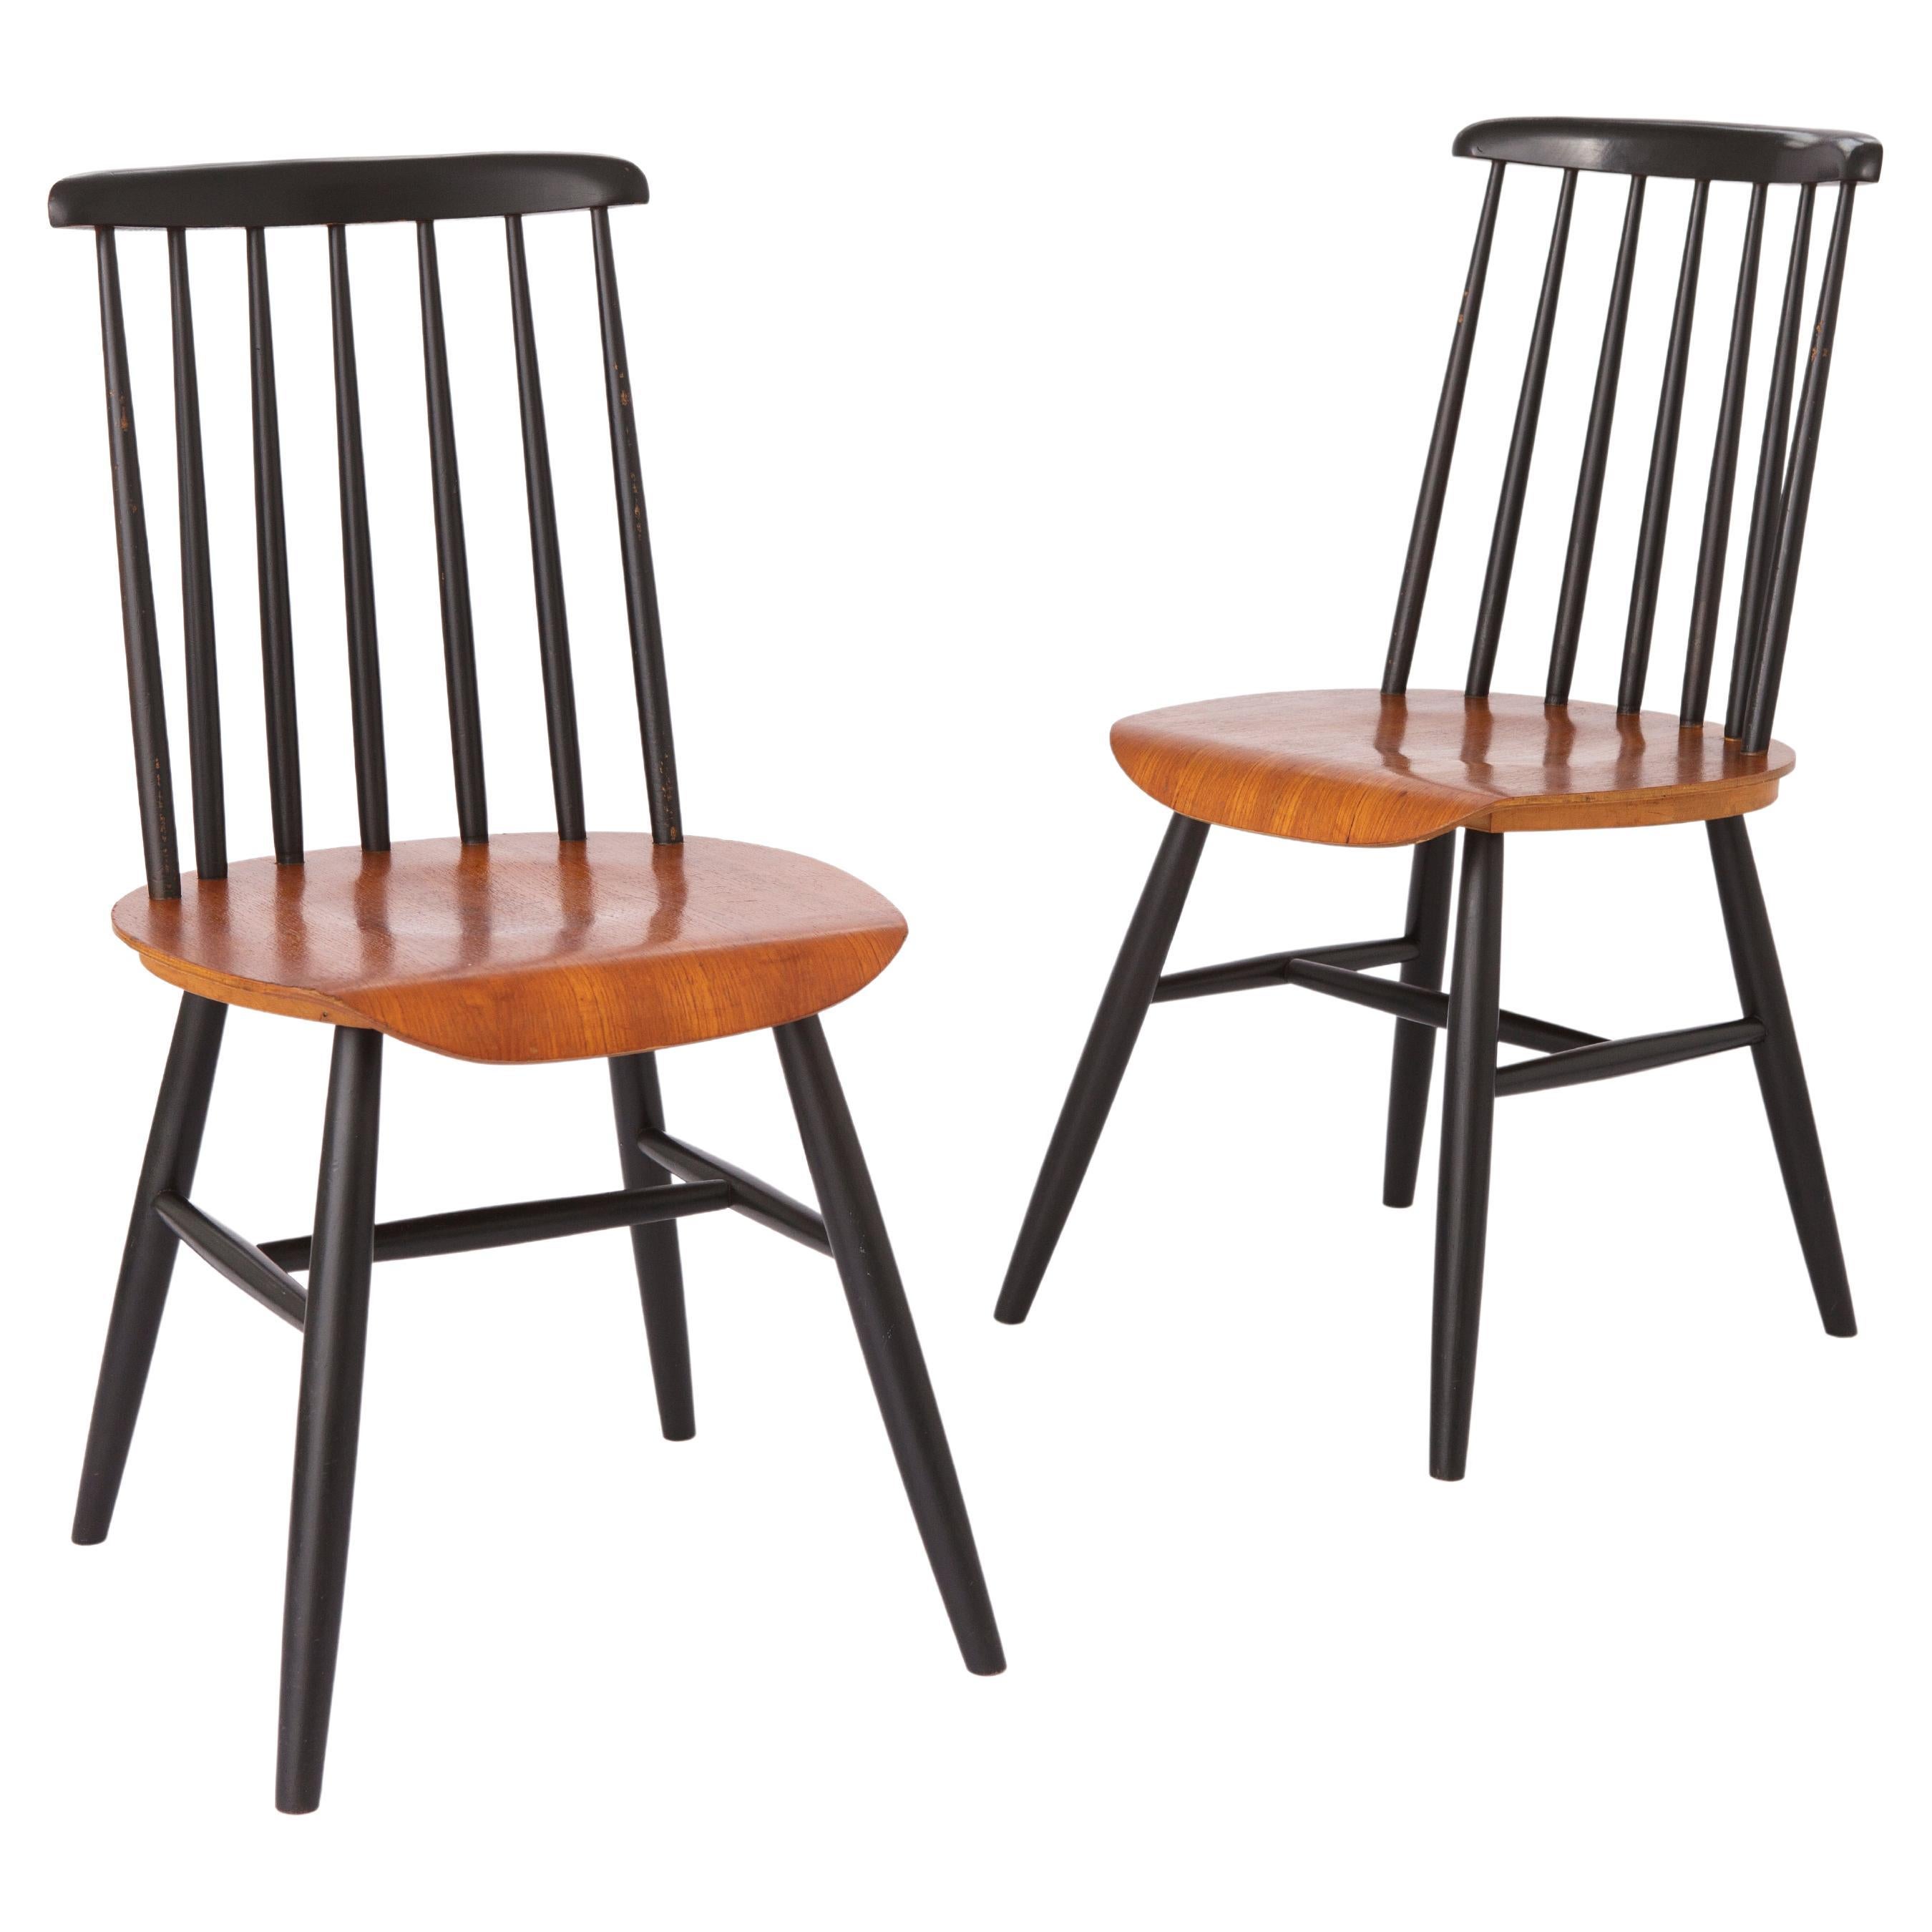 2 Vintage Spindle Back Chairs 1960s-1970s - Sweden